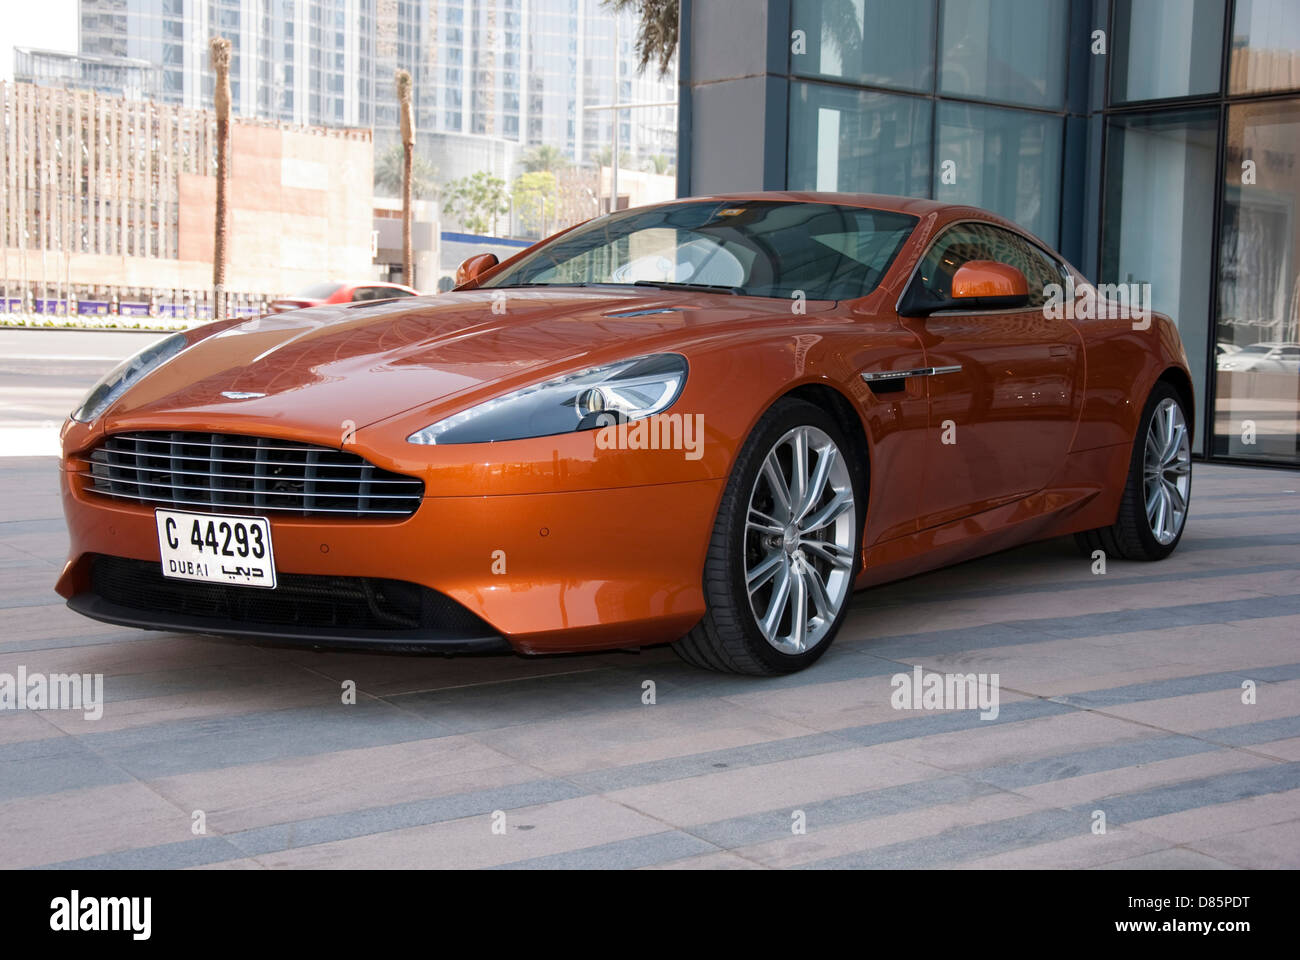 Copper Aston Martin Virage Luxury Sports Car Stock Photo